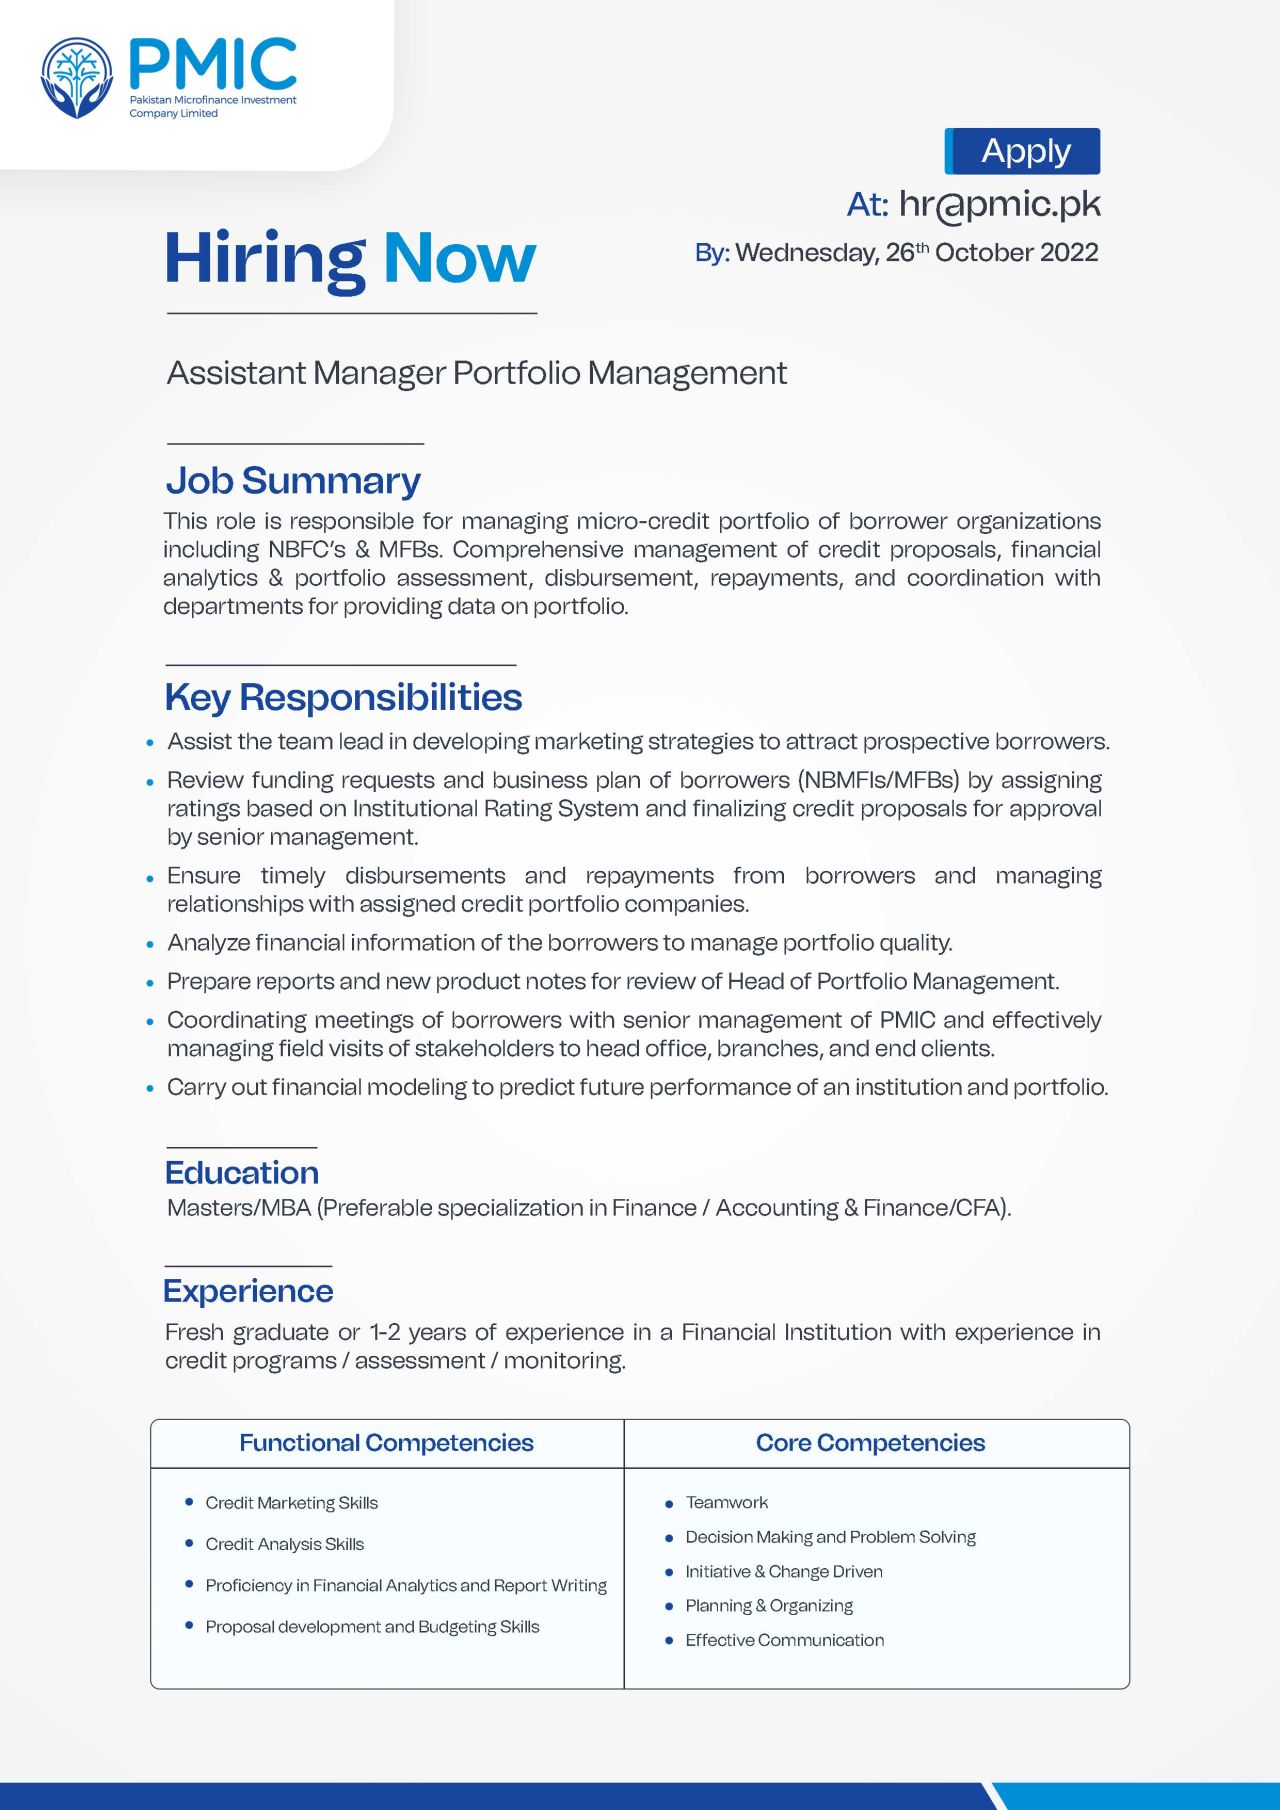 Pakistan Microfinance Investment Company Ltd PMIC Jobs For "Assistant Manager Portfolio Management"